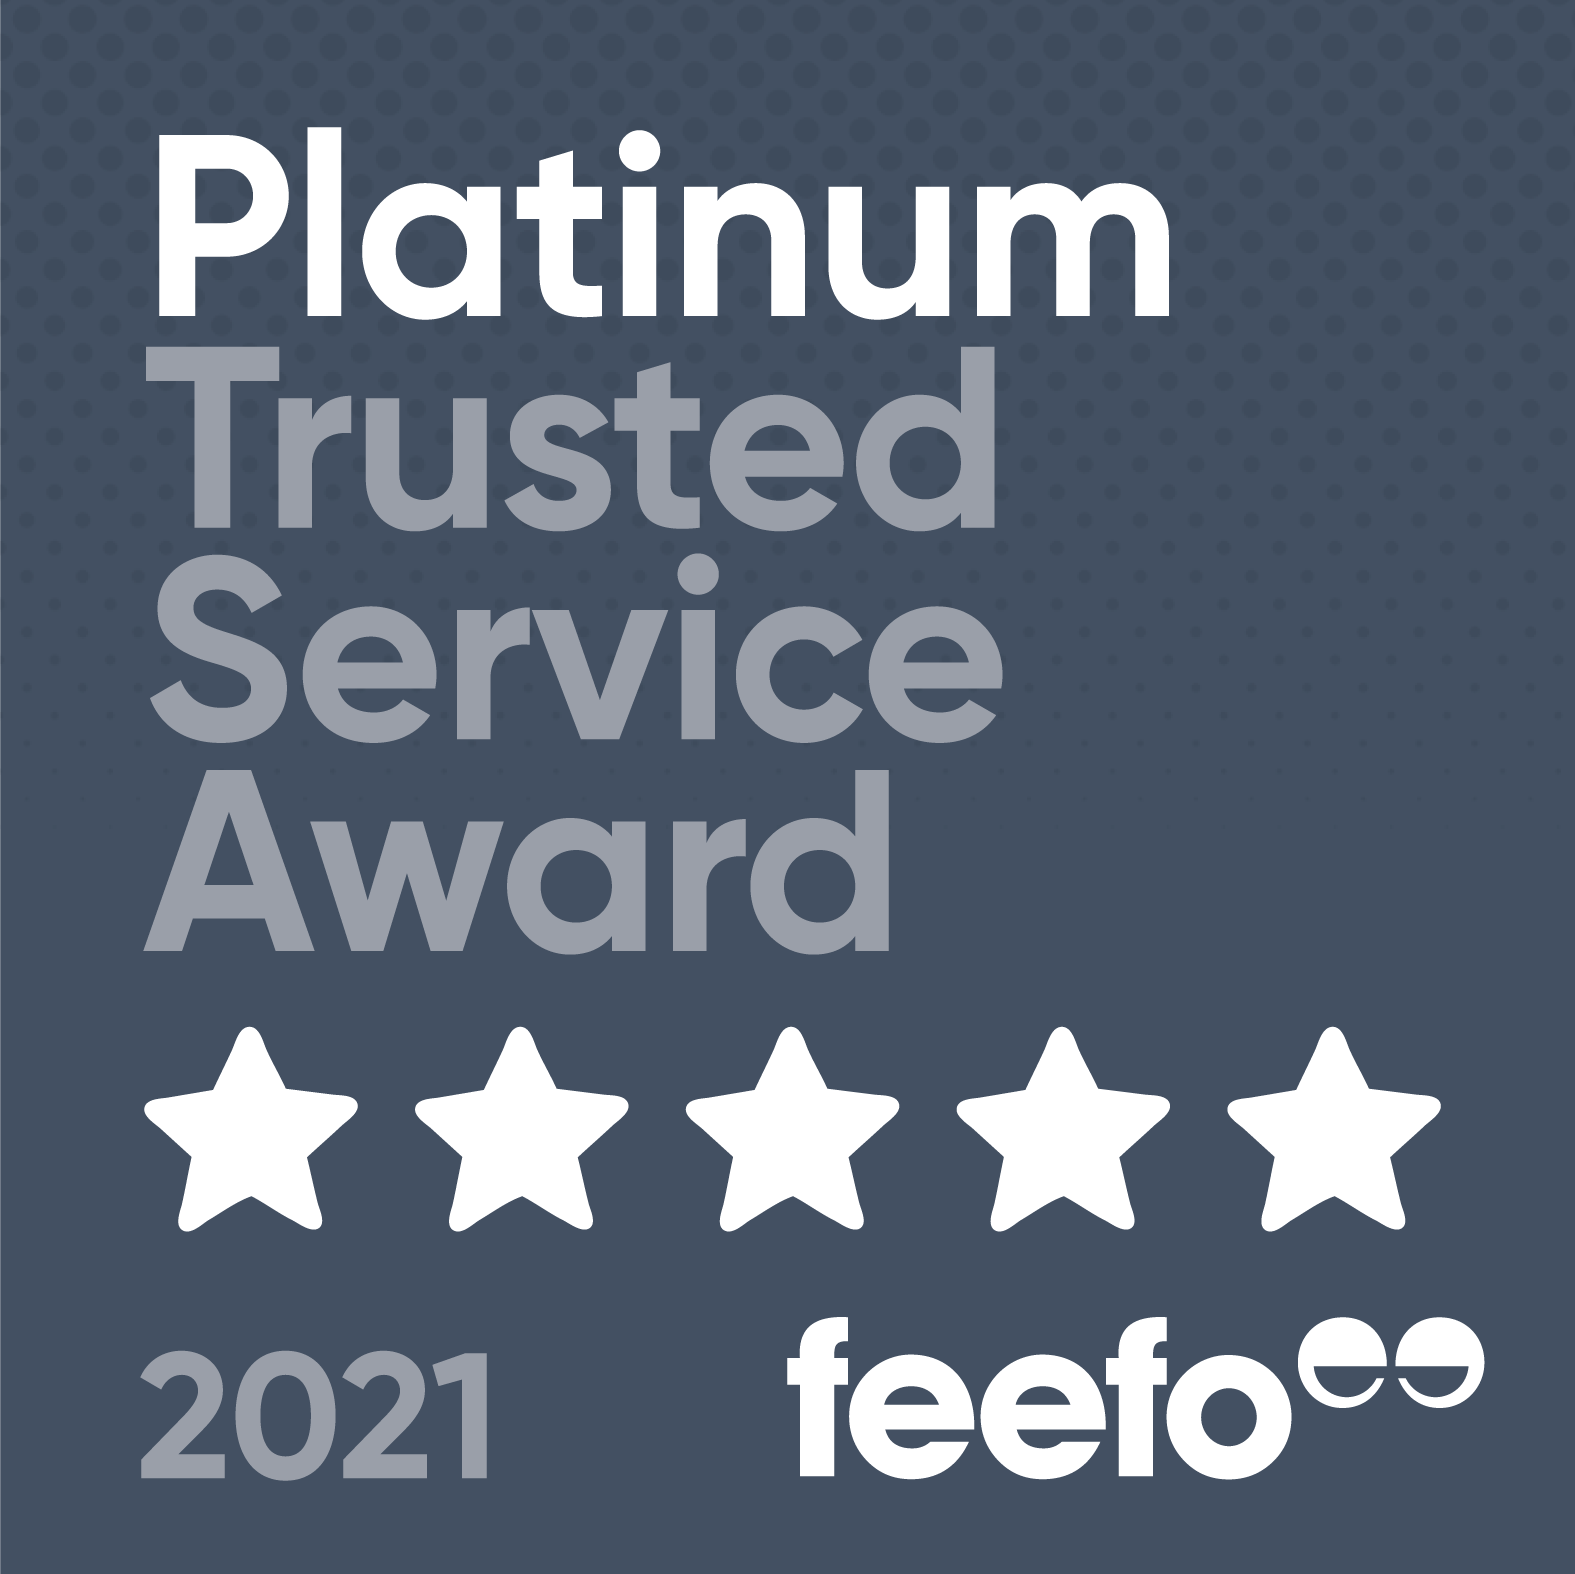 Feefo platinum logo 2020